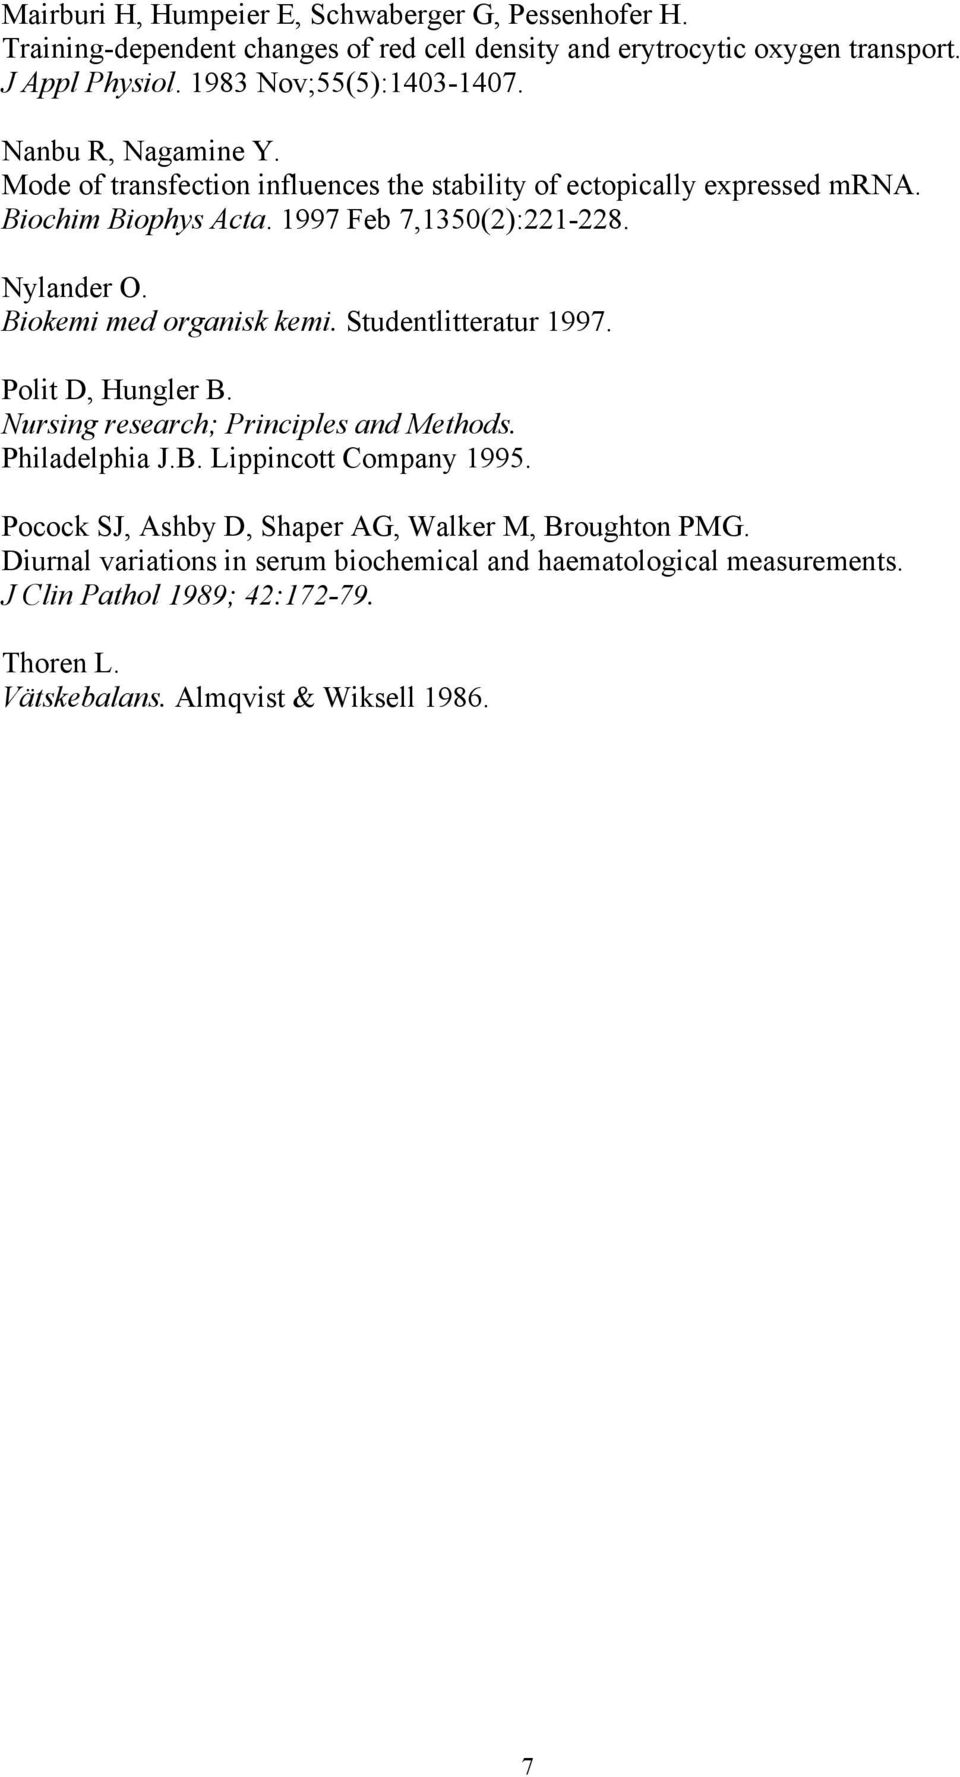 Biokemi med organisk kemi. Studentlitteratur 1997. Polit D, Hungler B. Nursing research; Principles and Methods. Philadelphia J.B. Lippincott Company 1995.